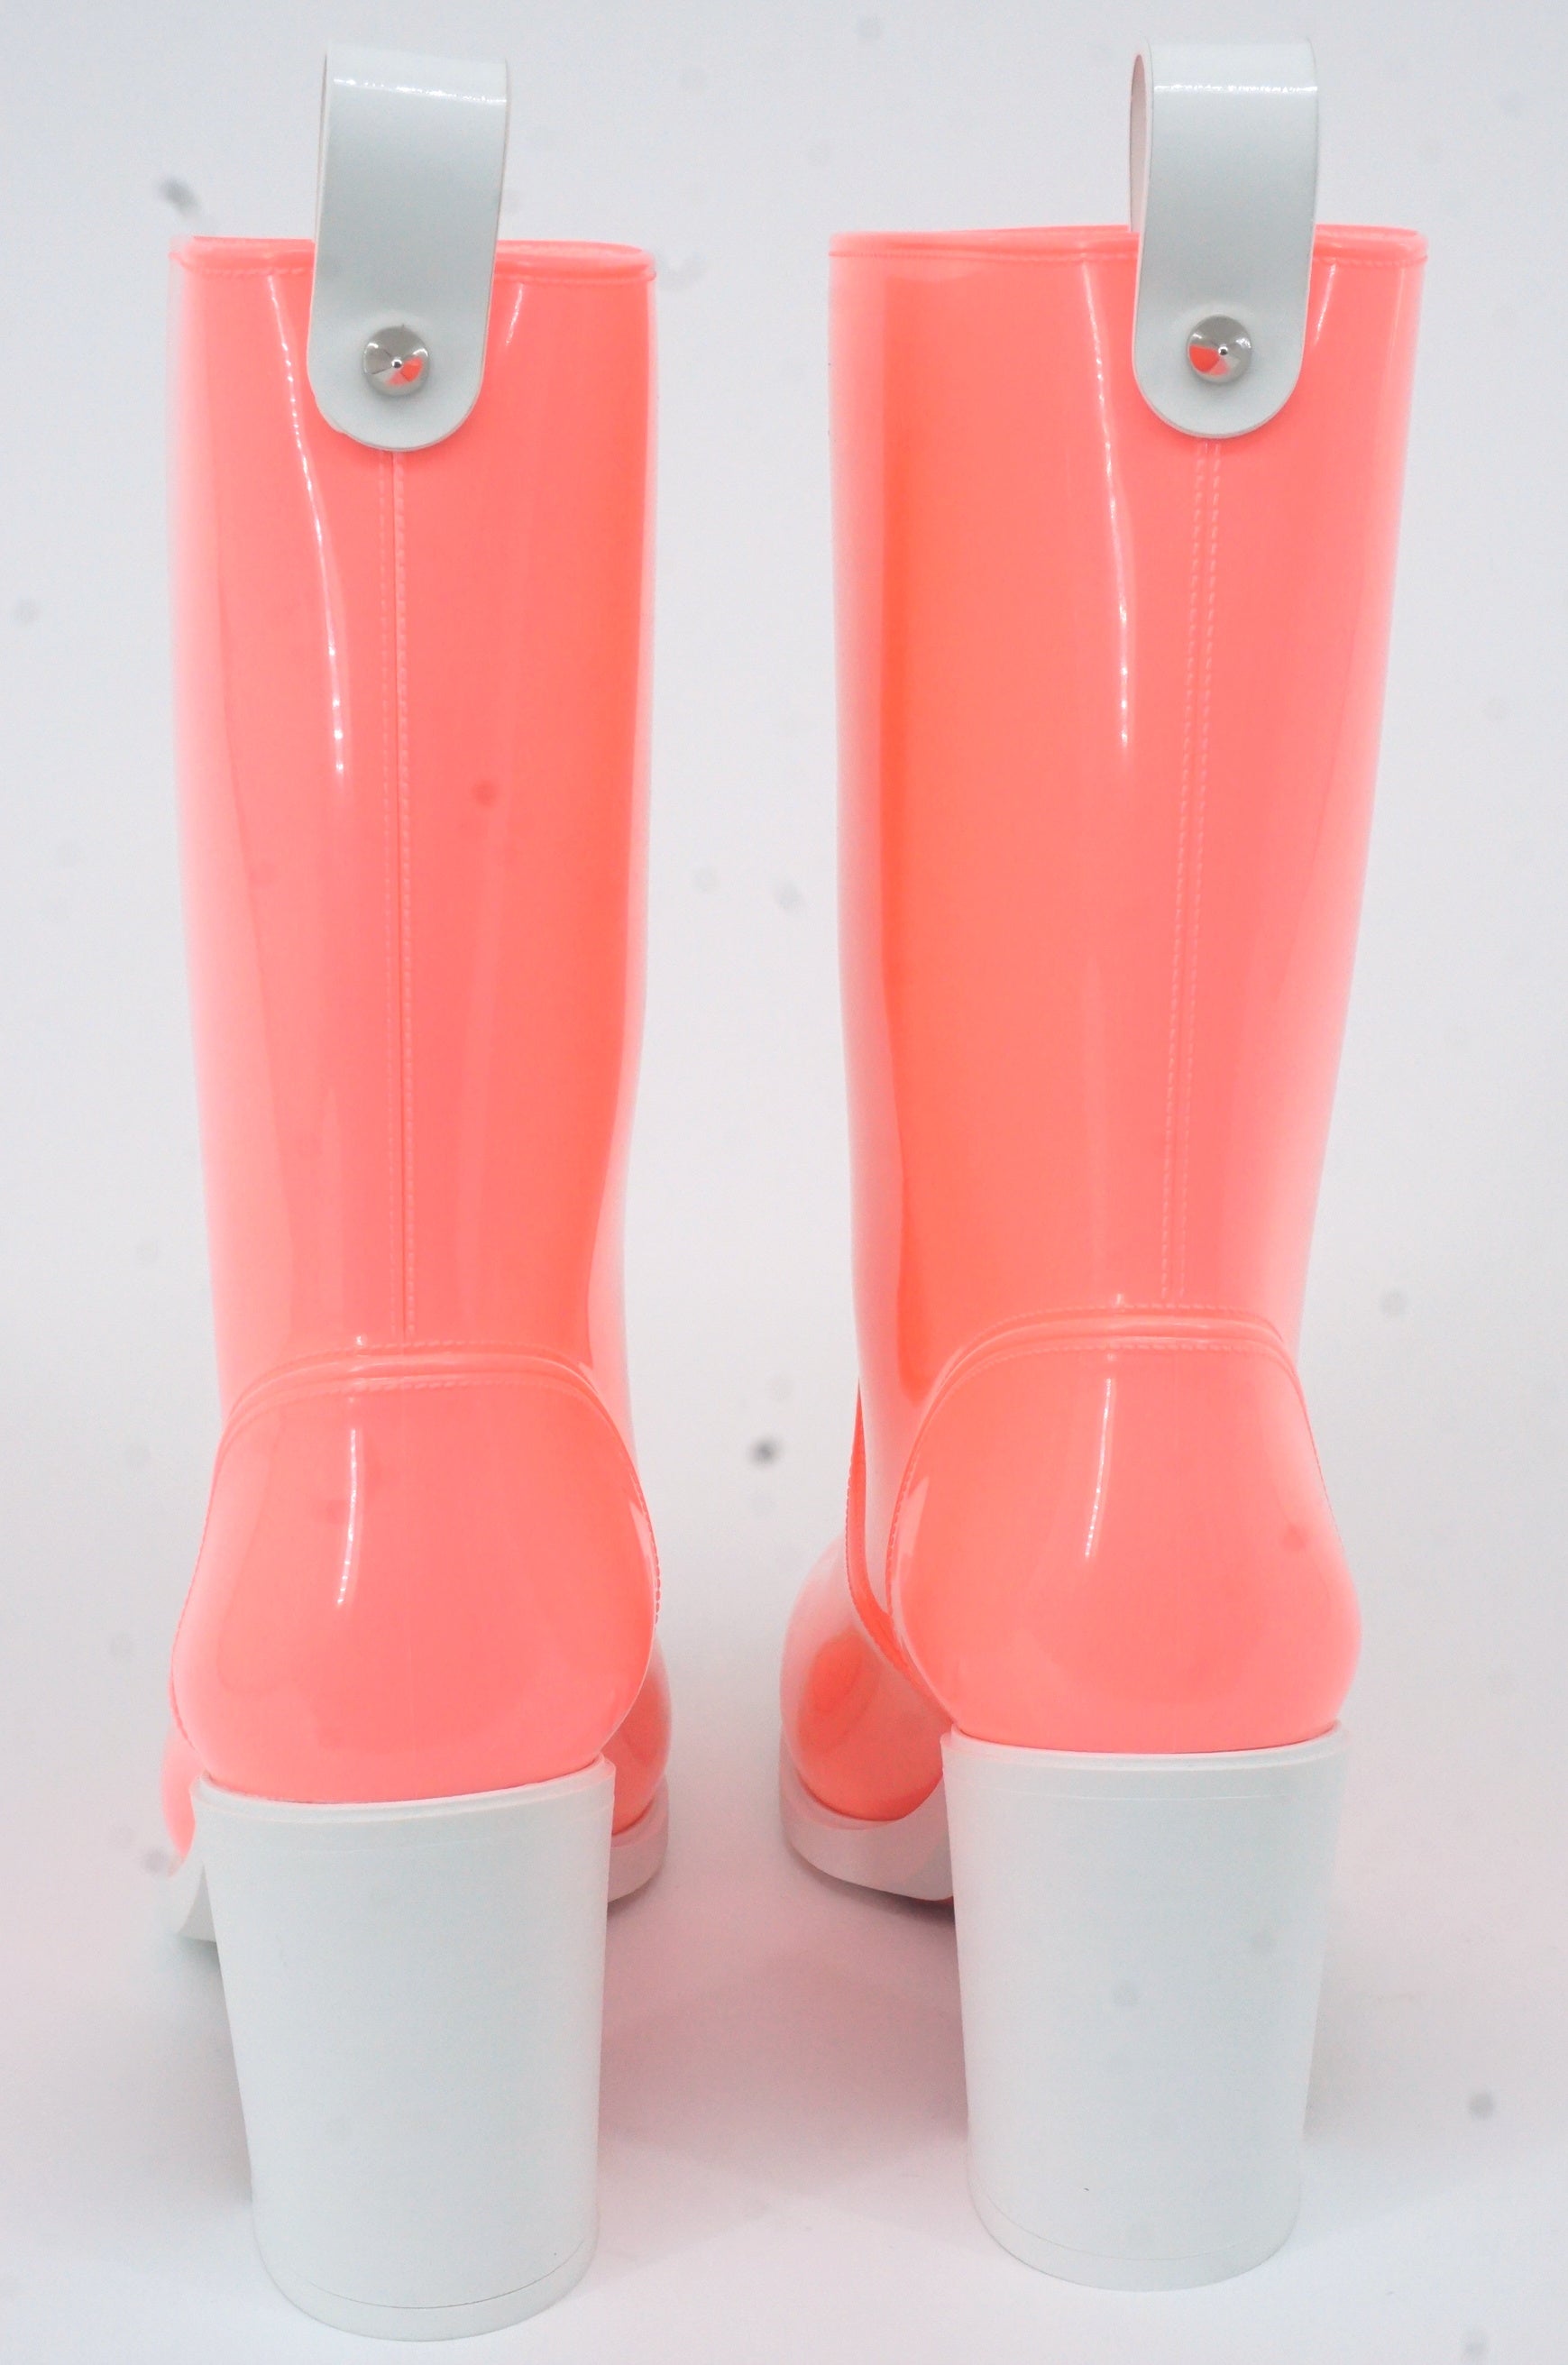 Christian Louboutin Loubirain 70 Rubber Rain Boots size 37 Pink Tall Snow PVC